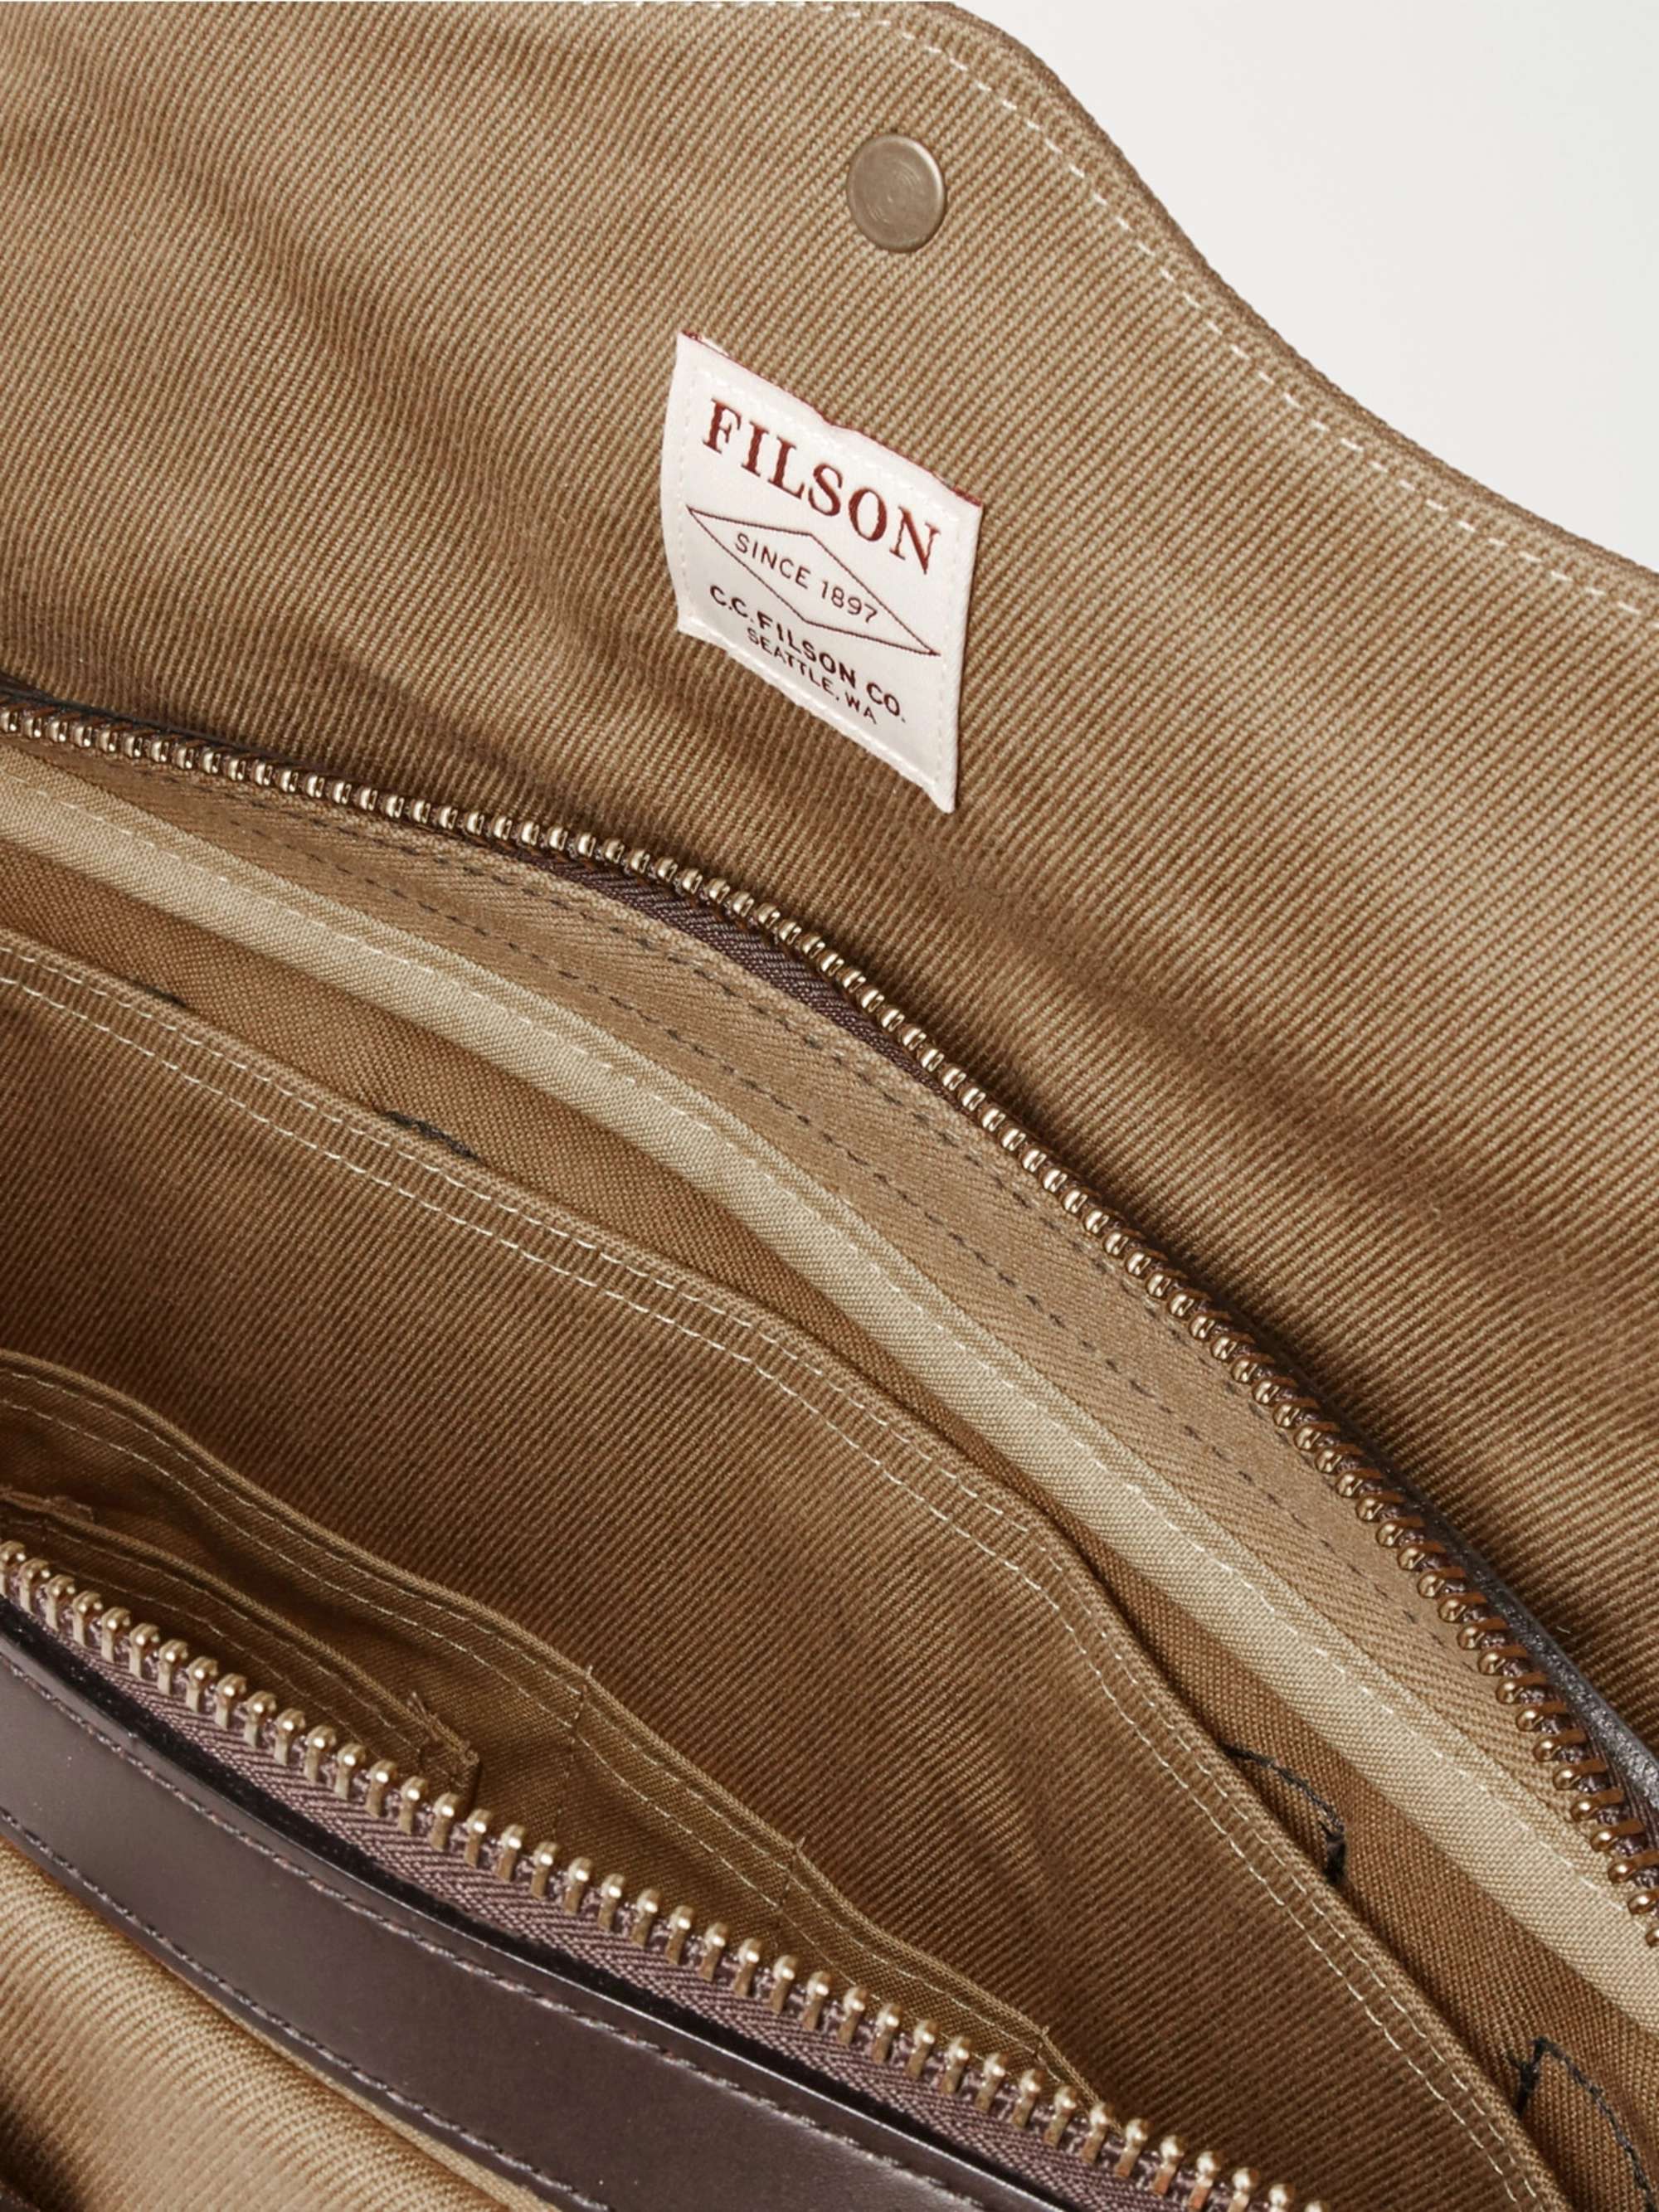 FILSON Original Leather-Trimmed Twill Briefcase